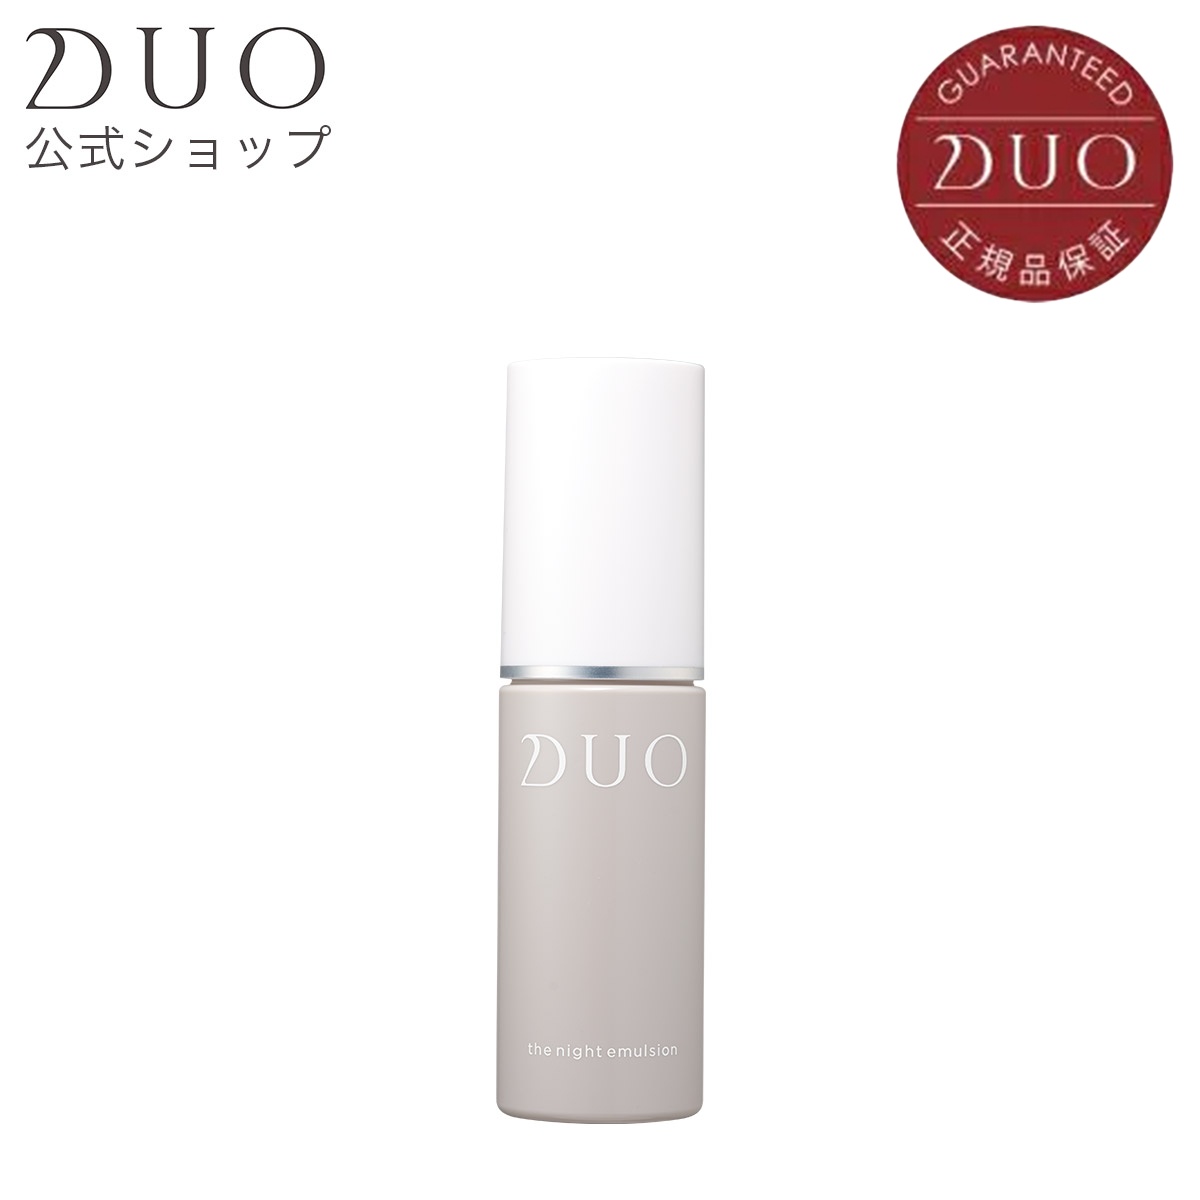 DUO公式 ザナイトエマルジョン 50代 40代 保湿 極潤 白潤 ハリ 弾力